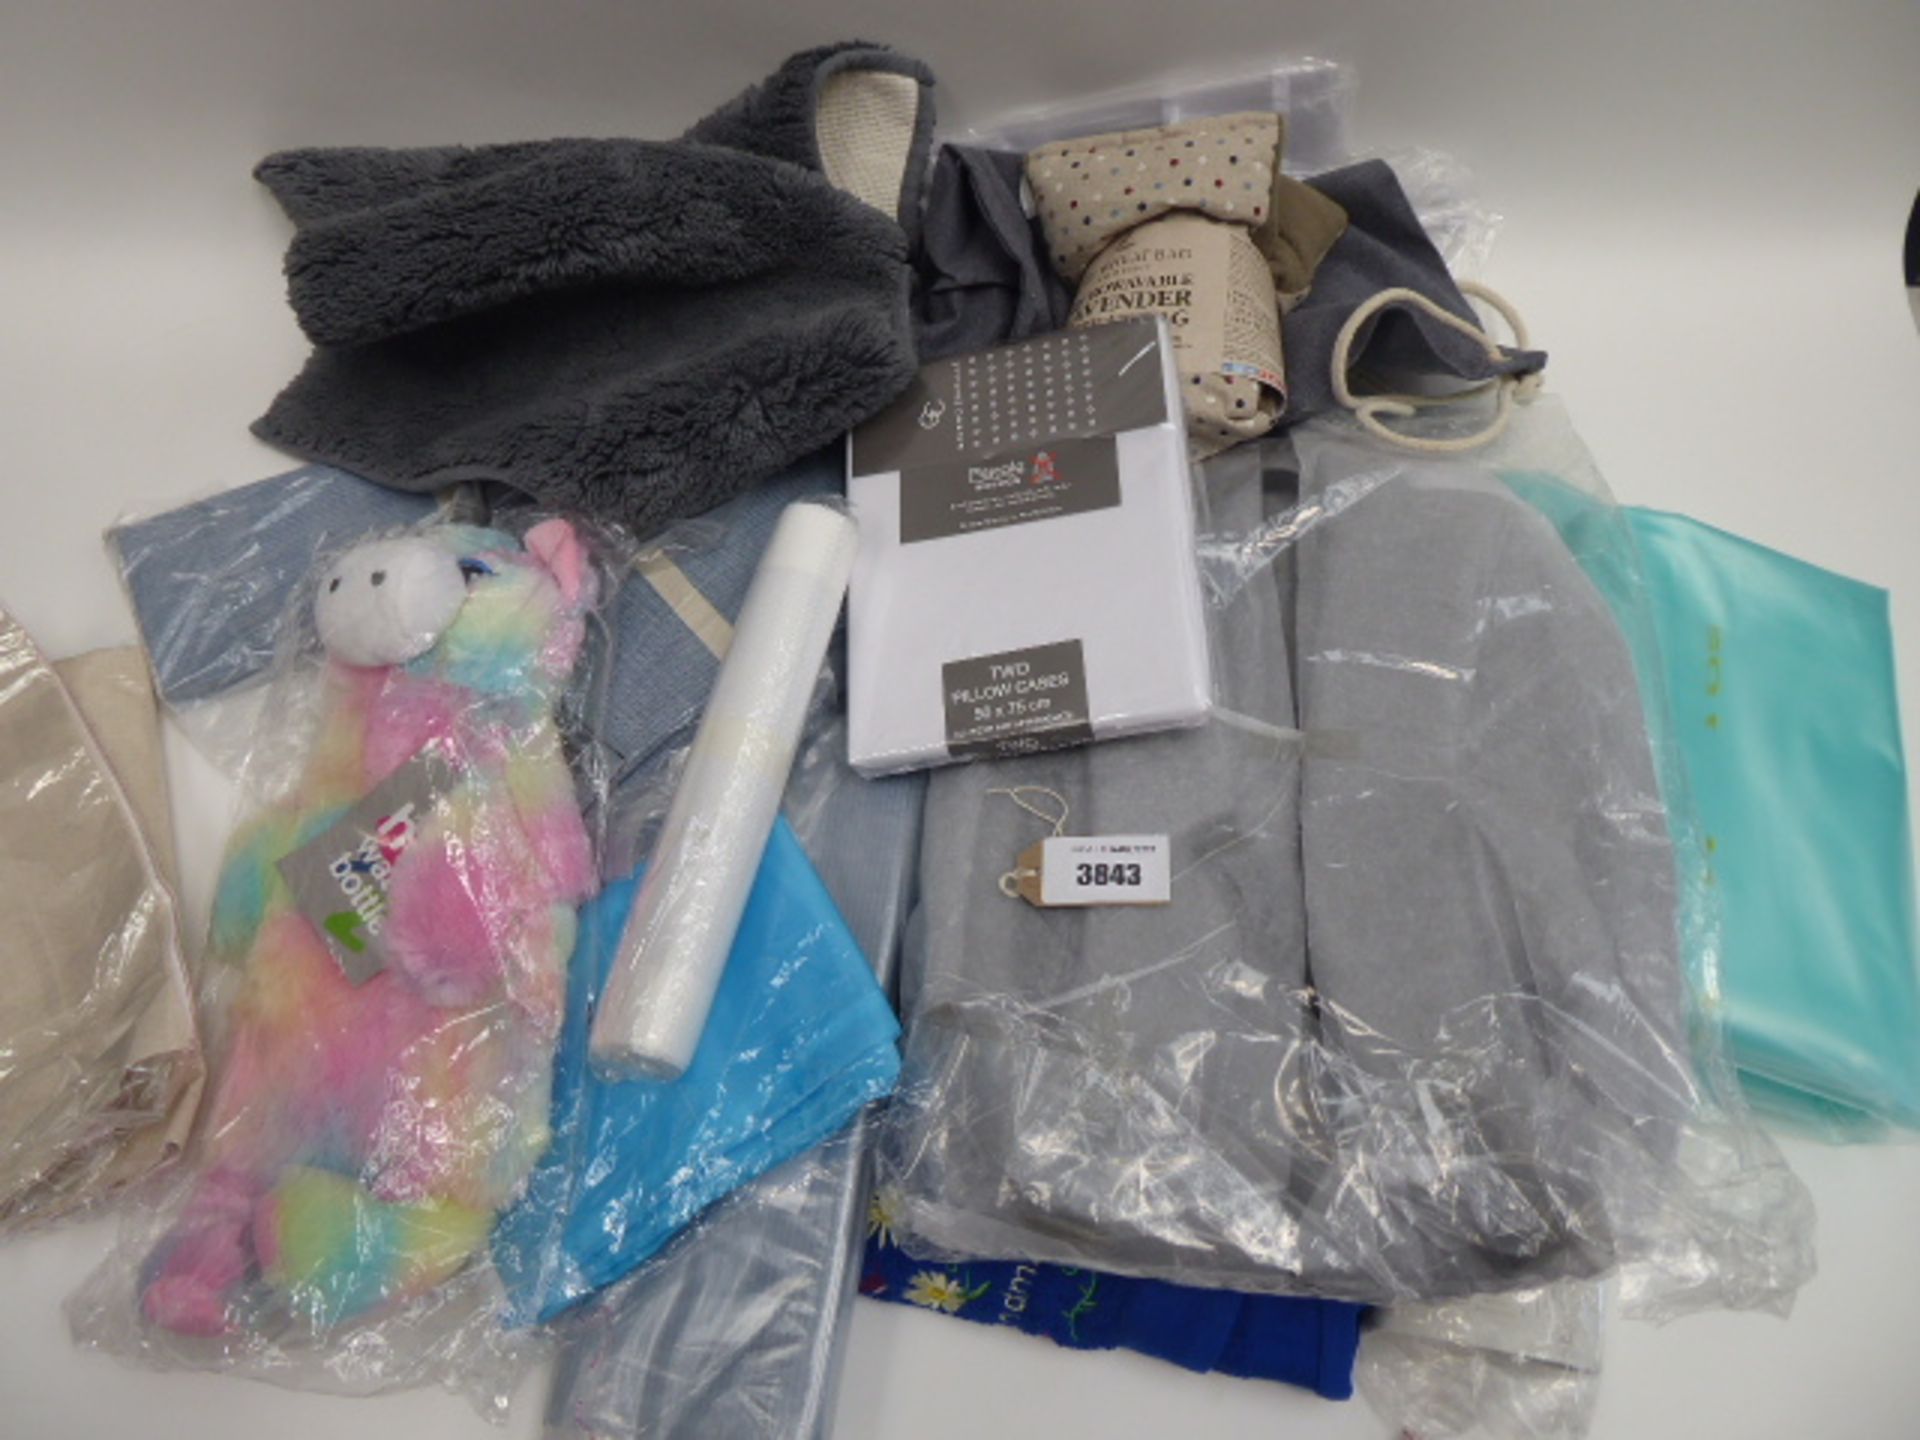 Bag containing quantity of various fabrics/materials, bags, towels, mats etc